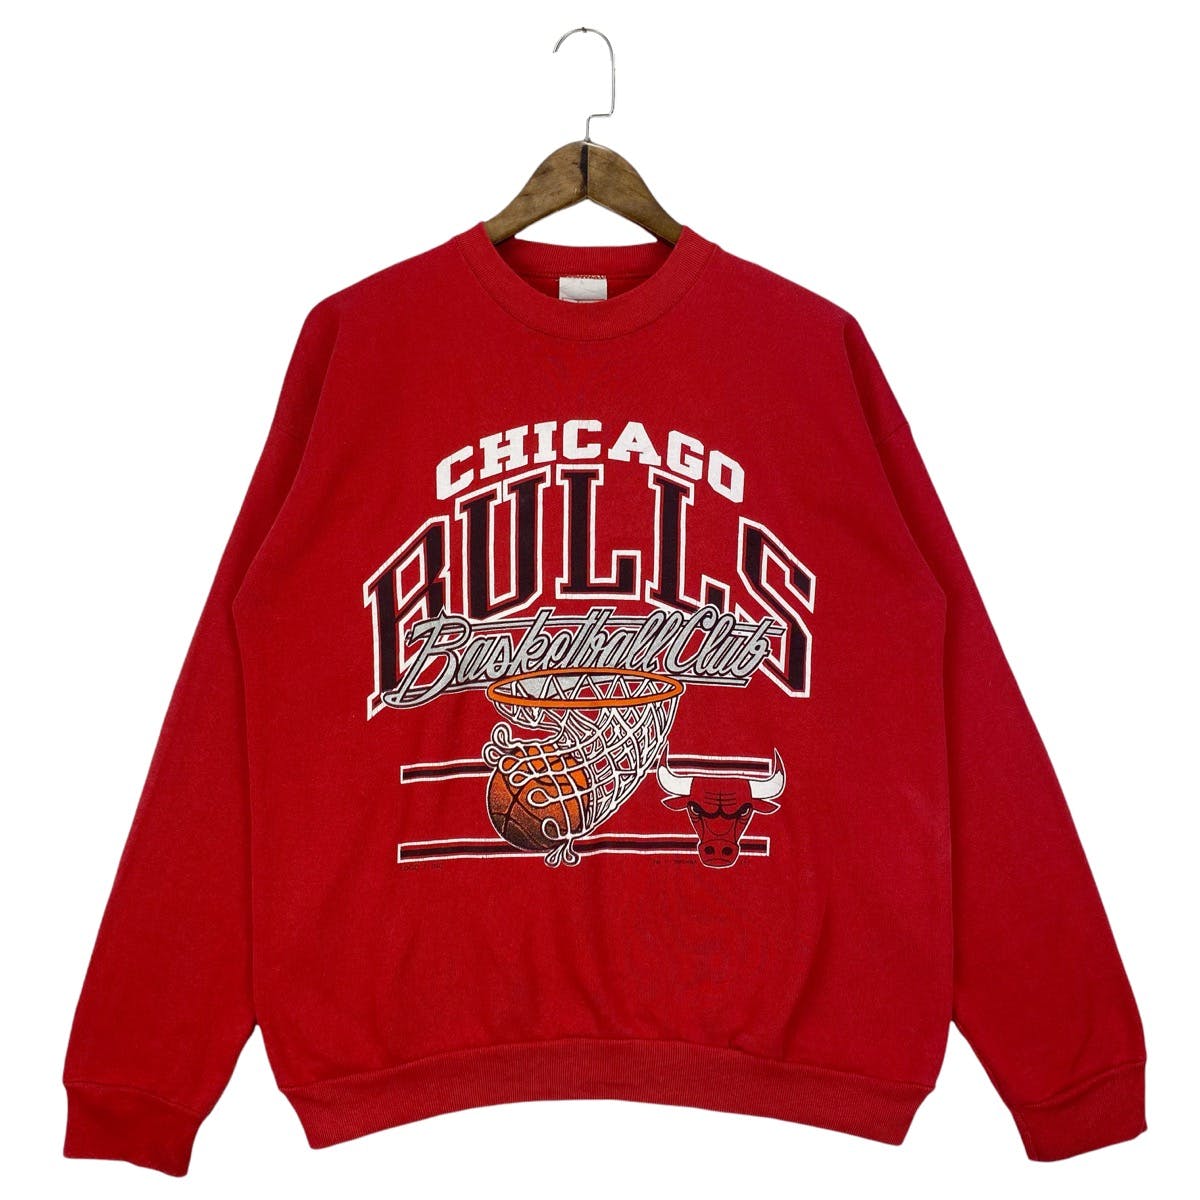 Vintage 1990 Chicago Bulls Basketball Club Sweatshirt - 2